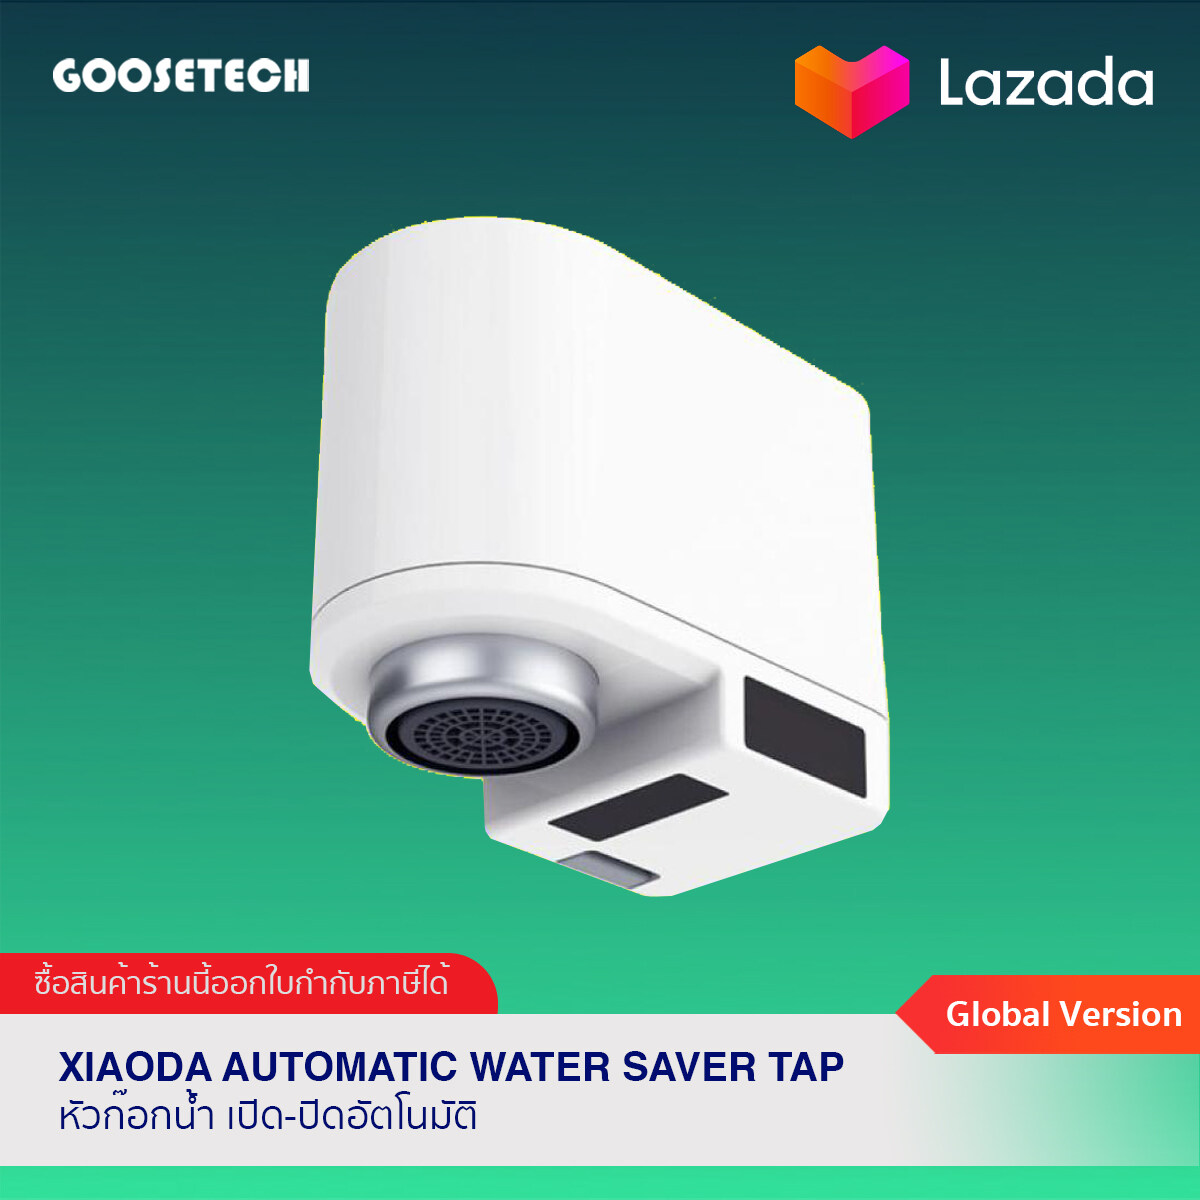 Xiaoda Automatic Water Saver Tap หัวก๊อกน้ำ เปิด-ปิด อัตโนมัติ (รับประกัน 6 เดือน)